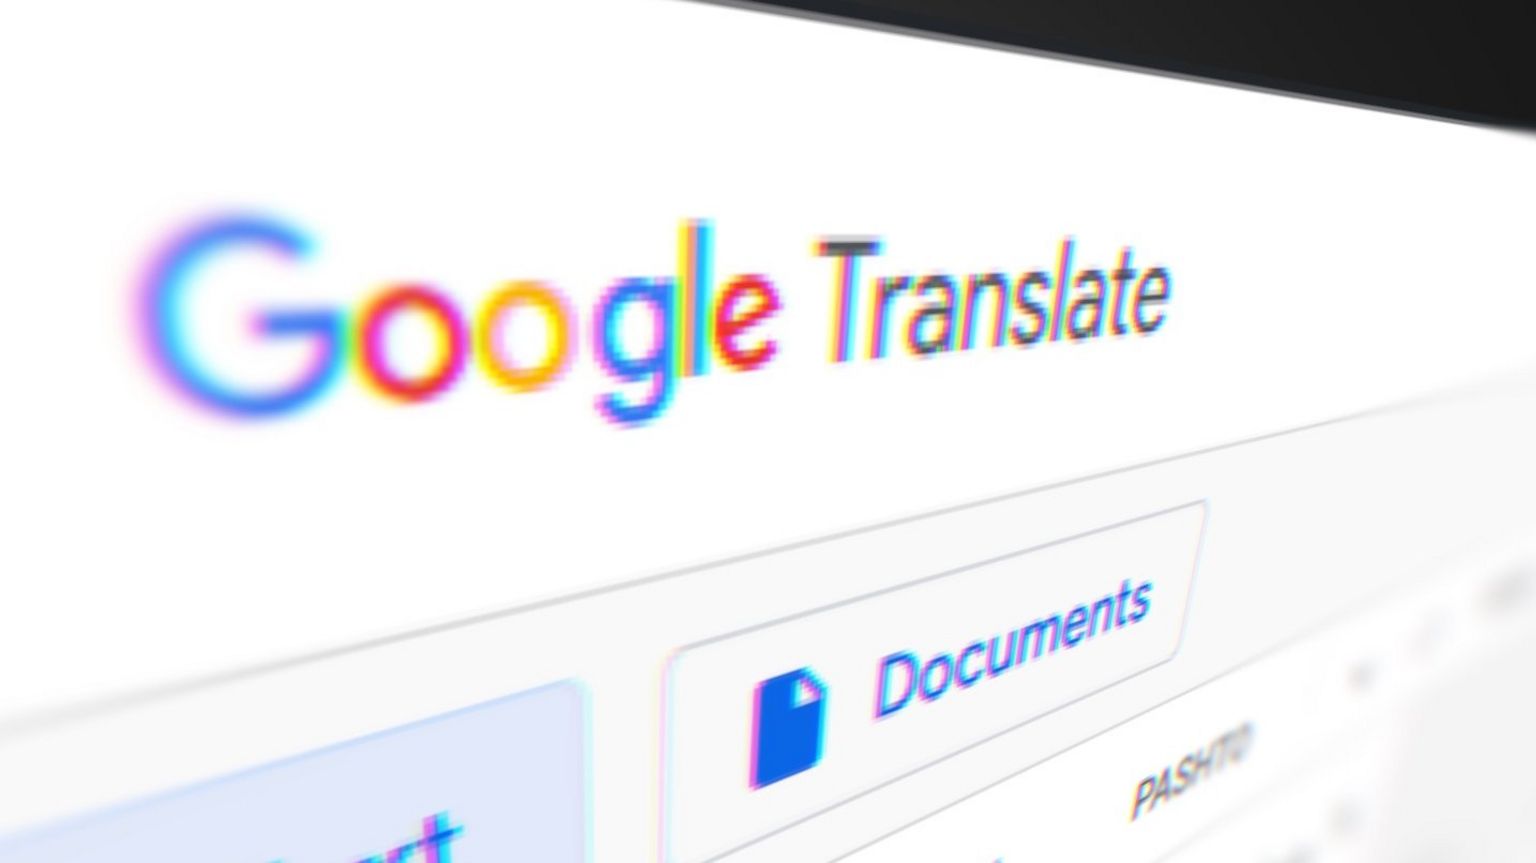 Google translate logo